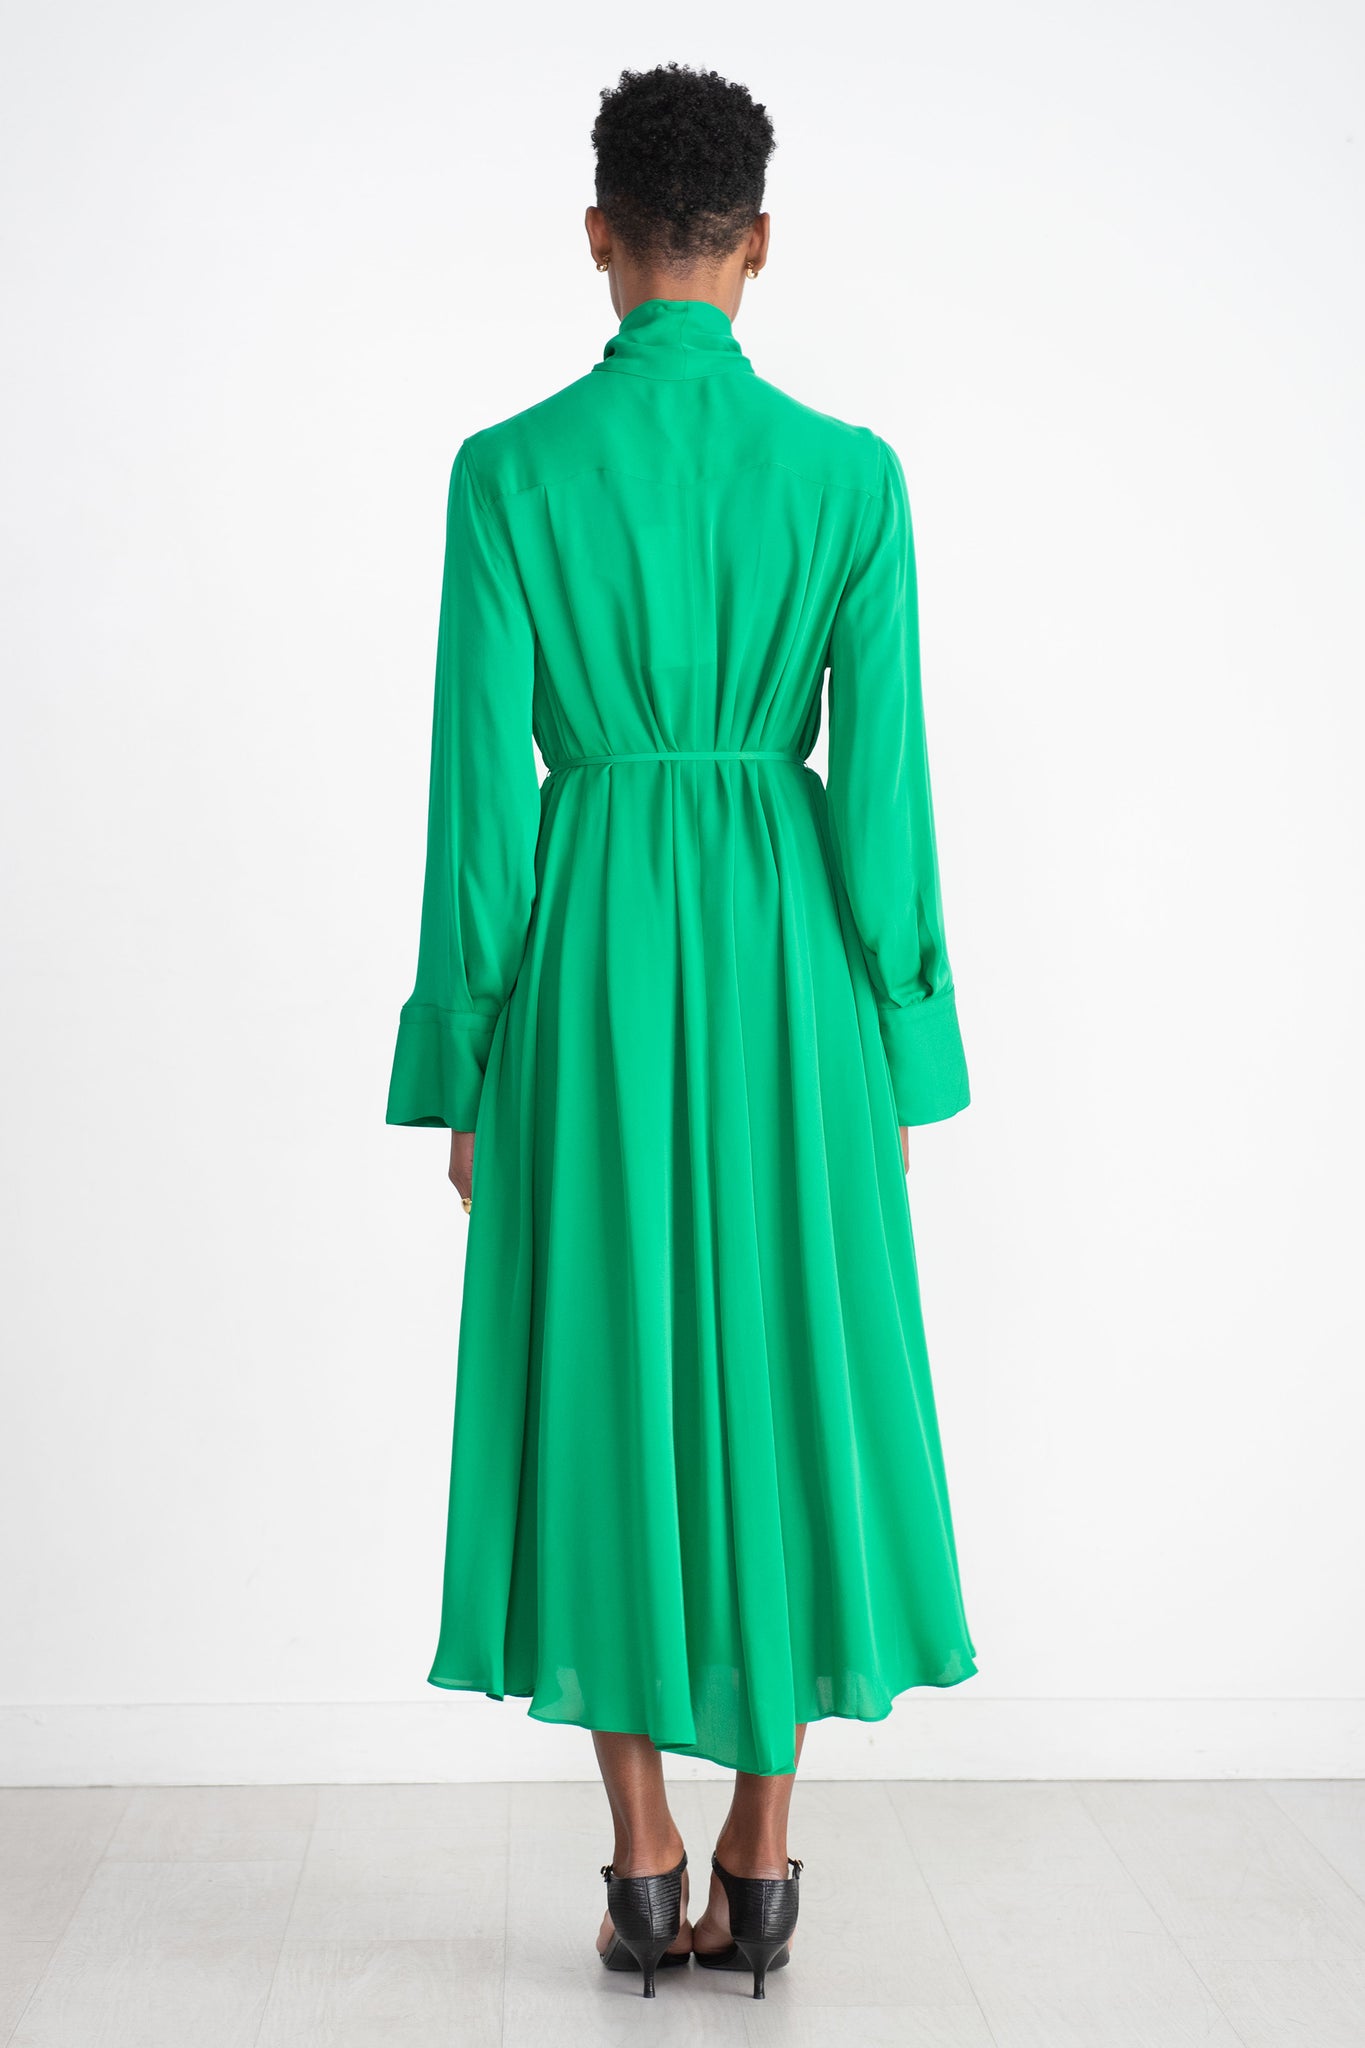 HEIRLOME - Joanna Dress, Emerald